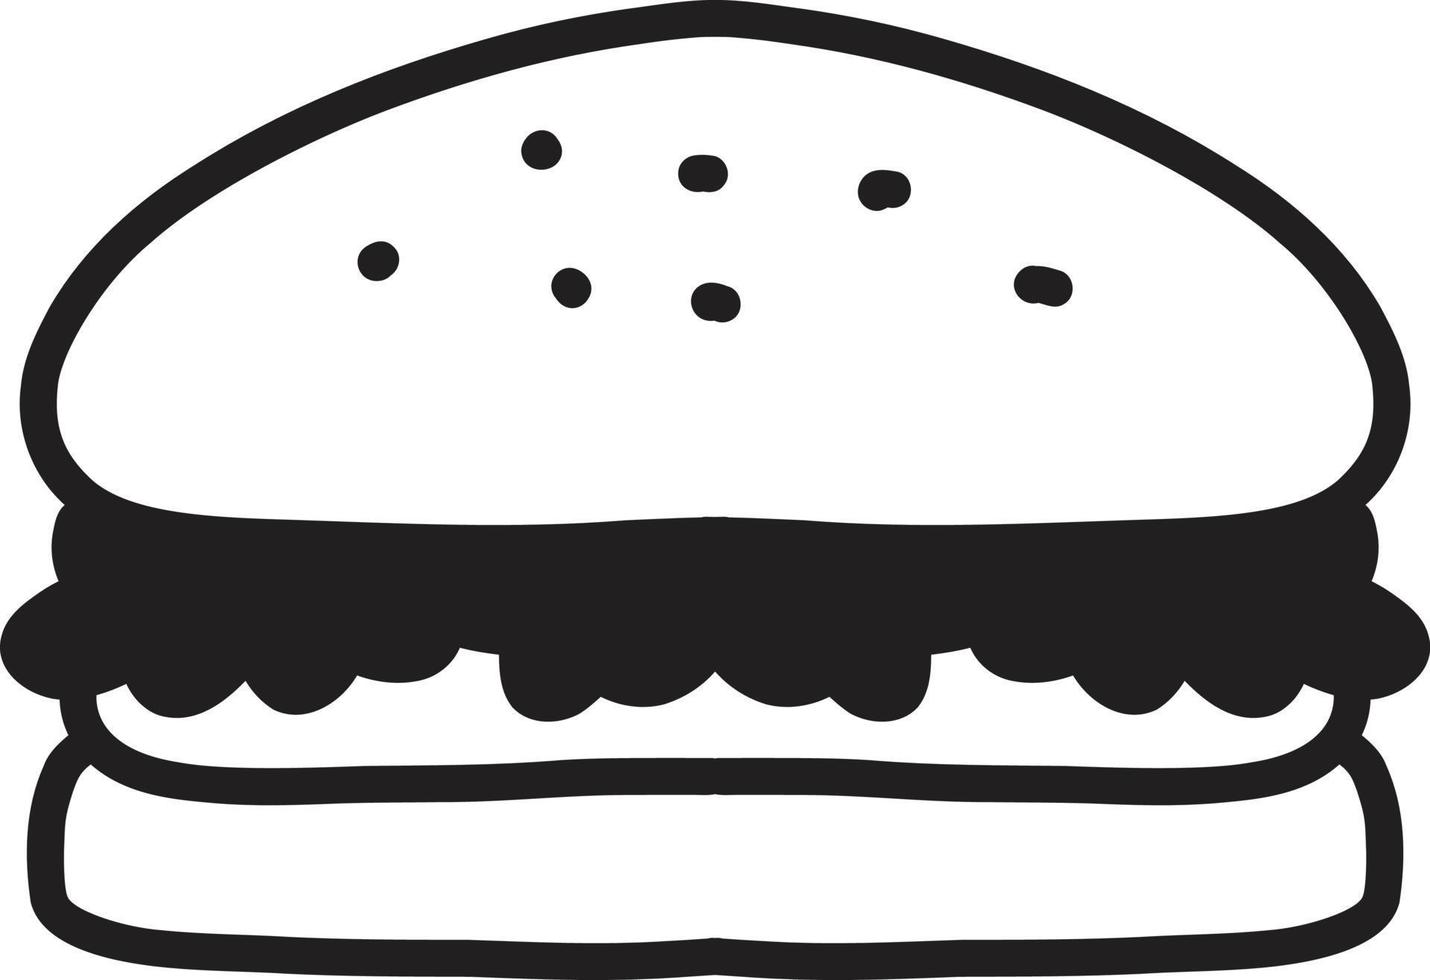 Hand Drawn sandwich illustration vector